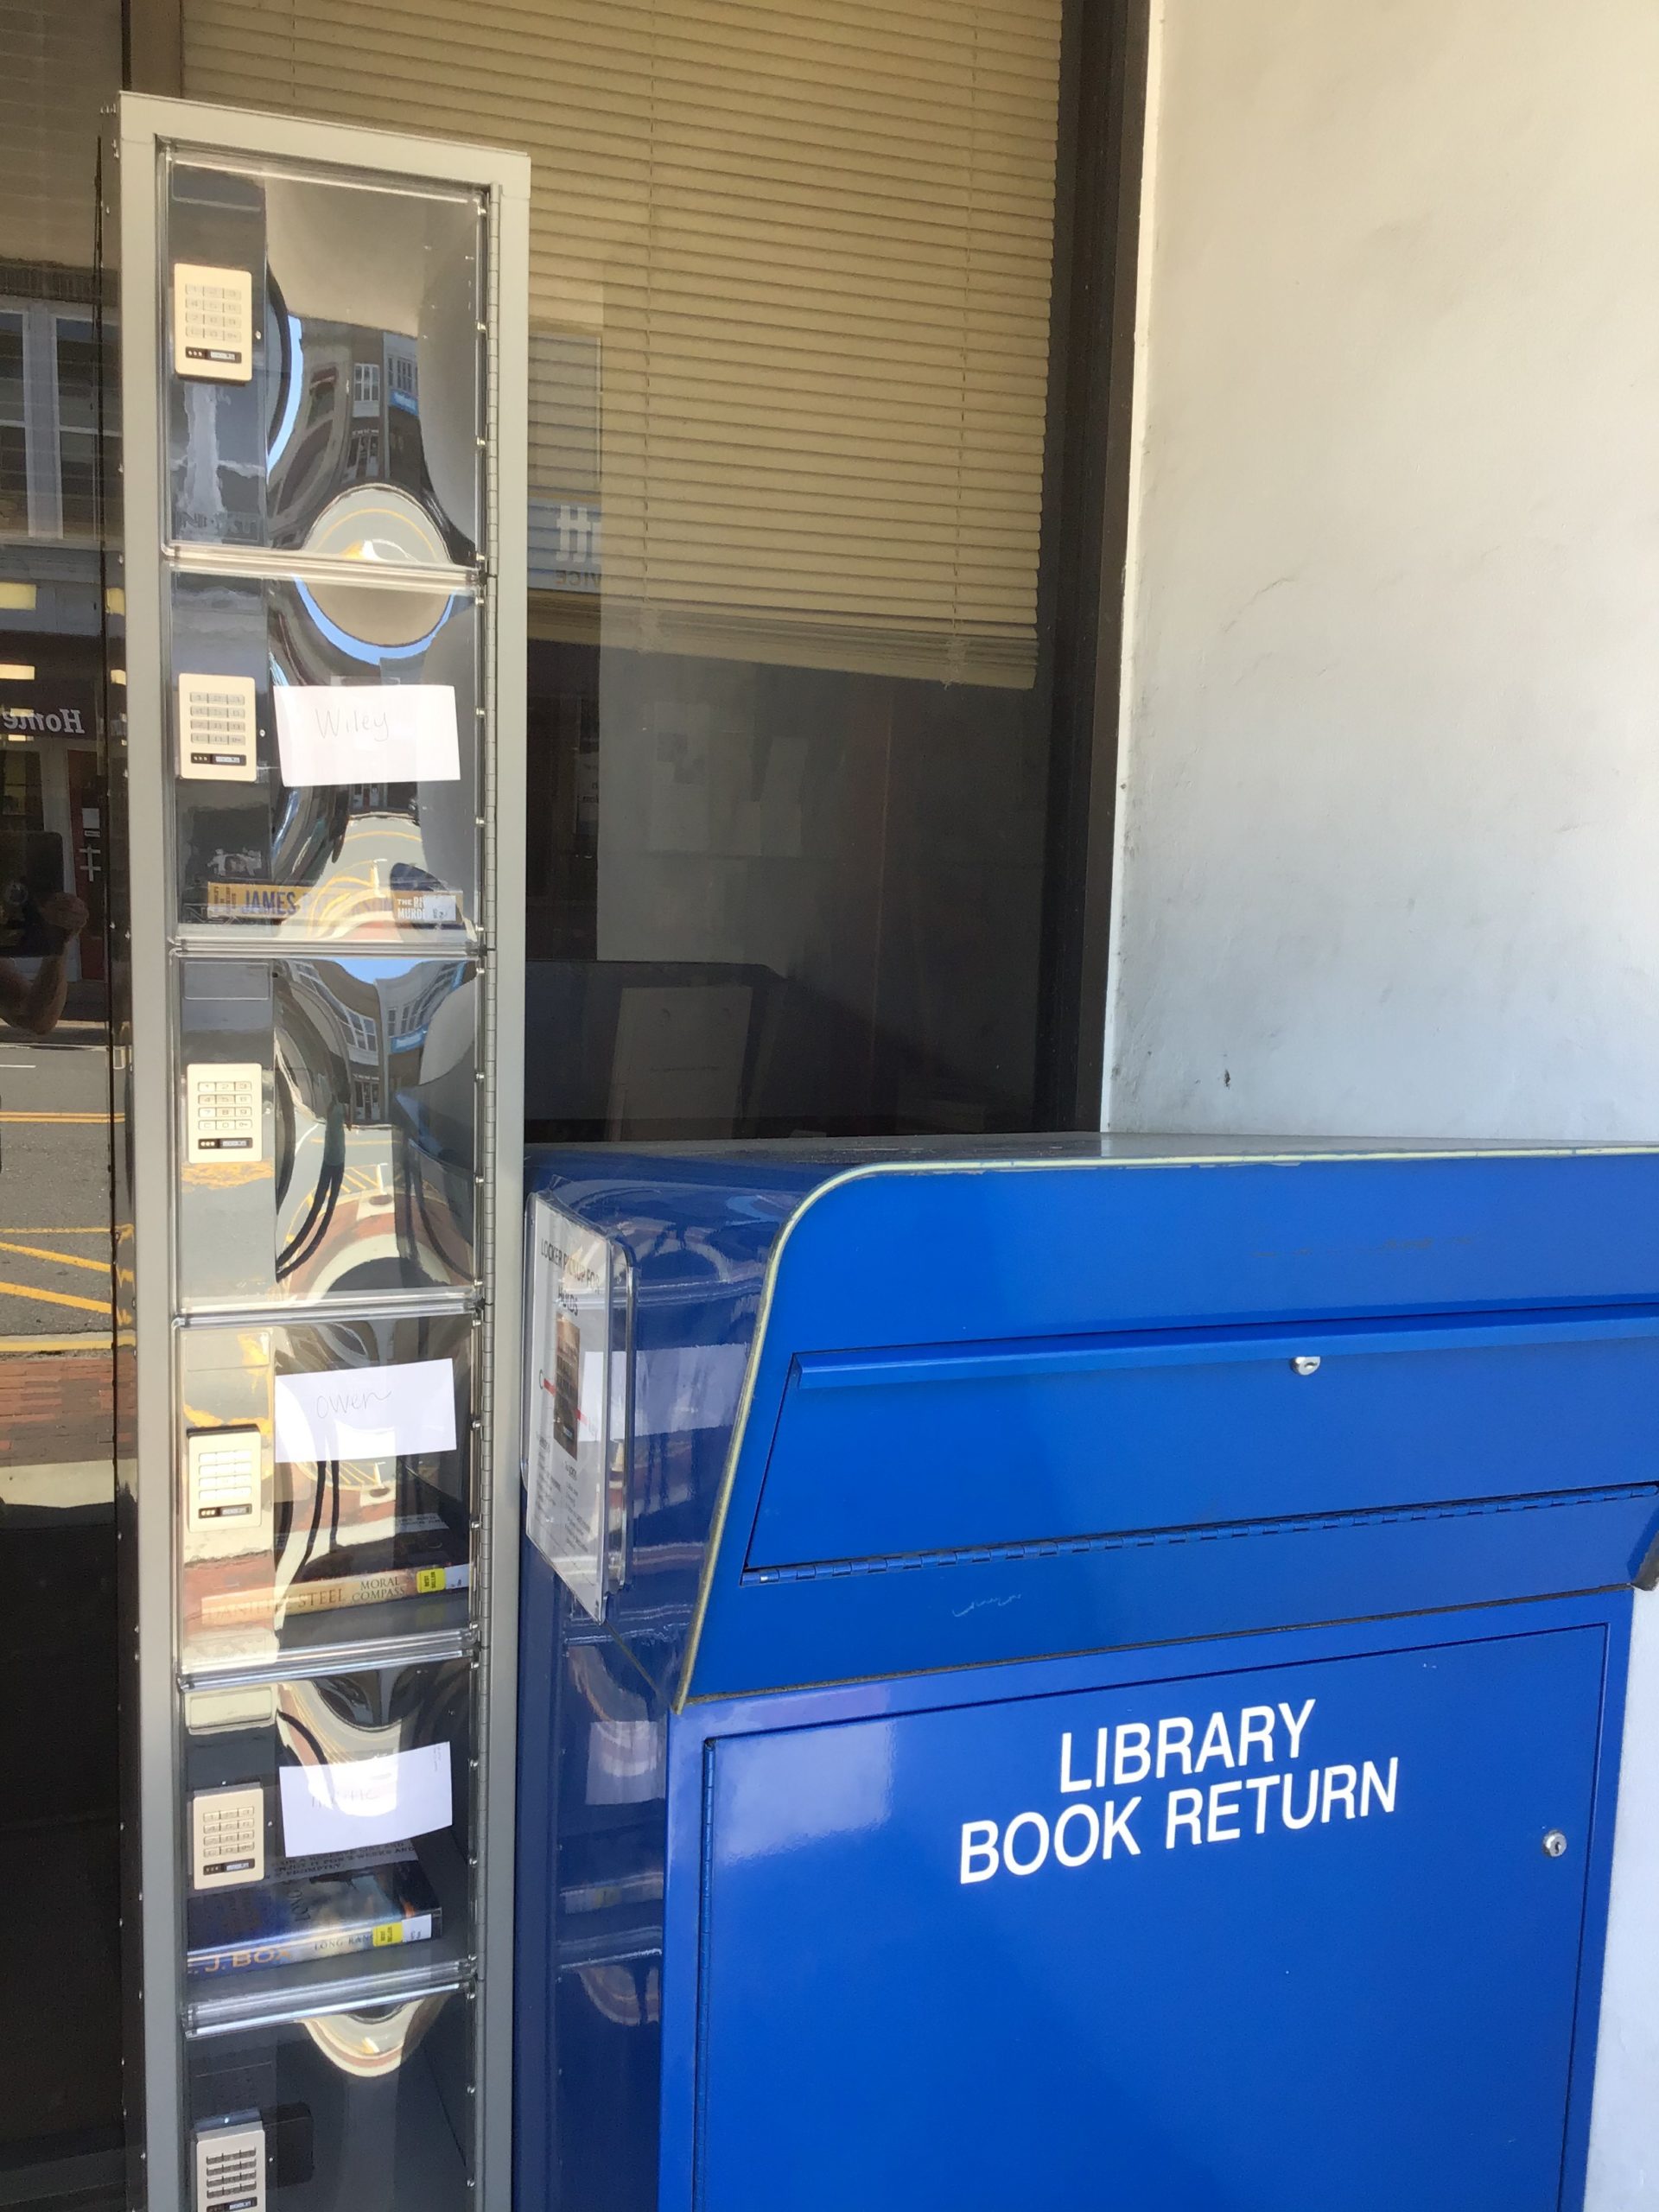 Library Drop Box